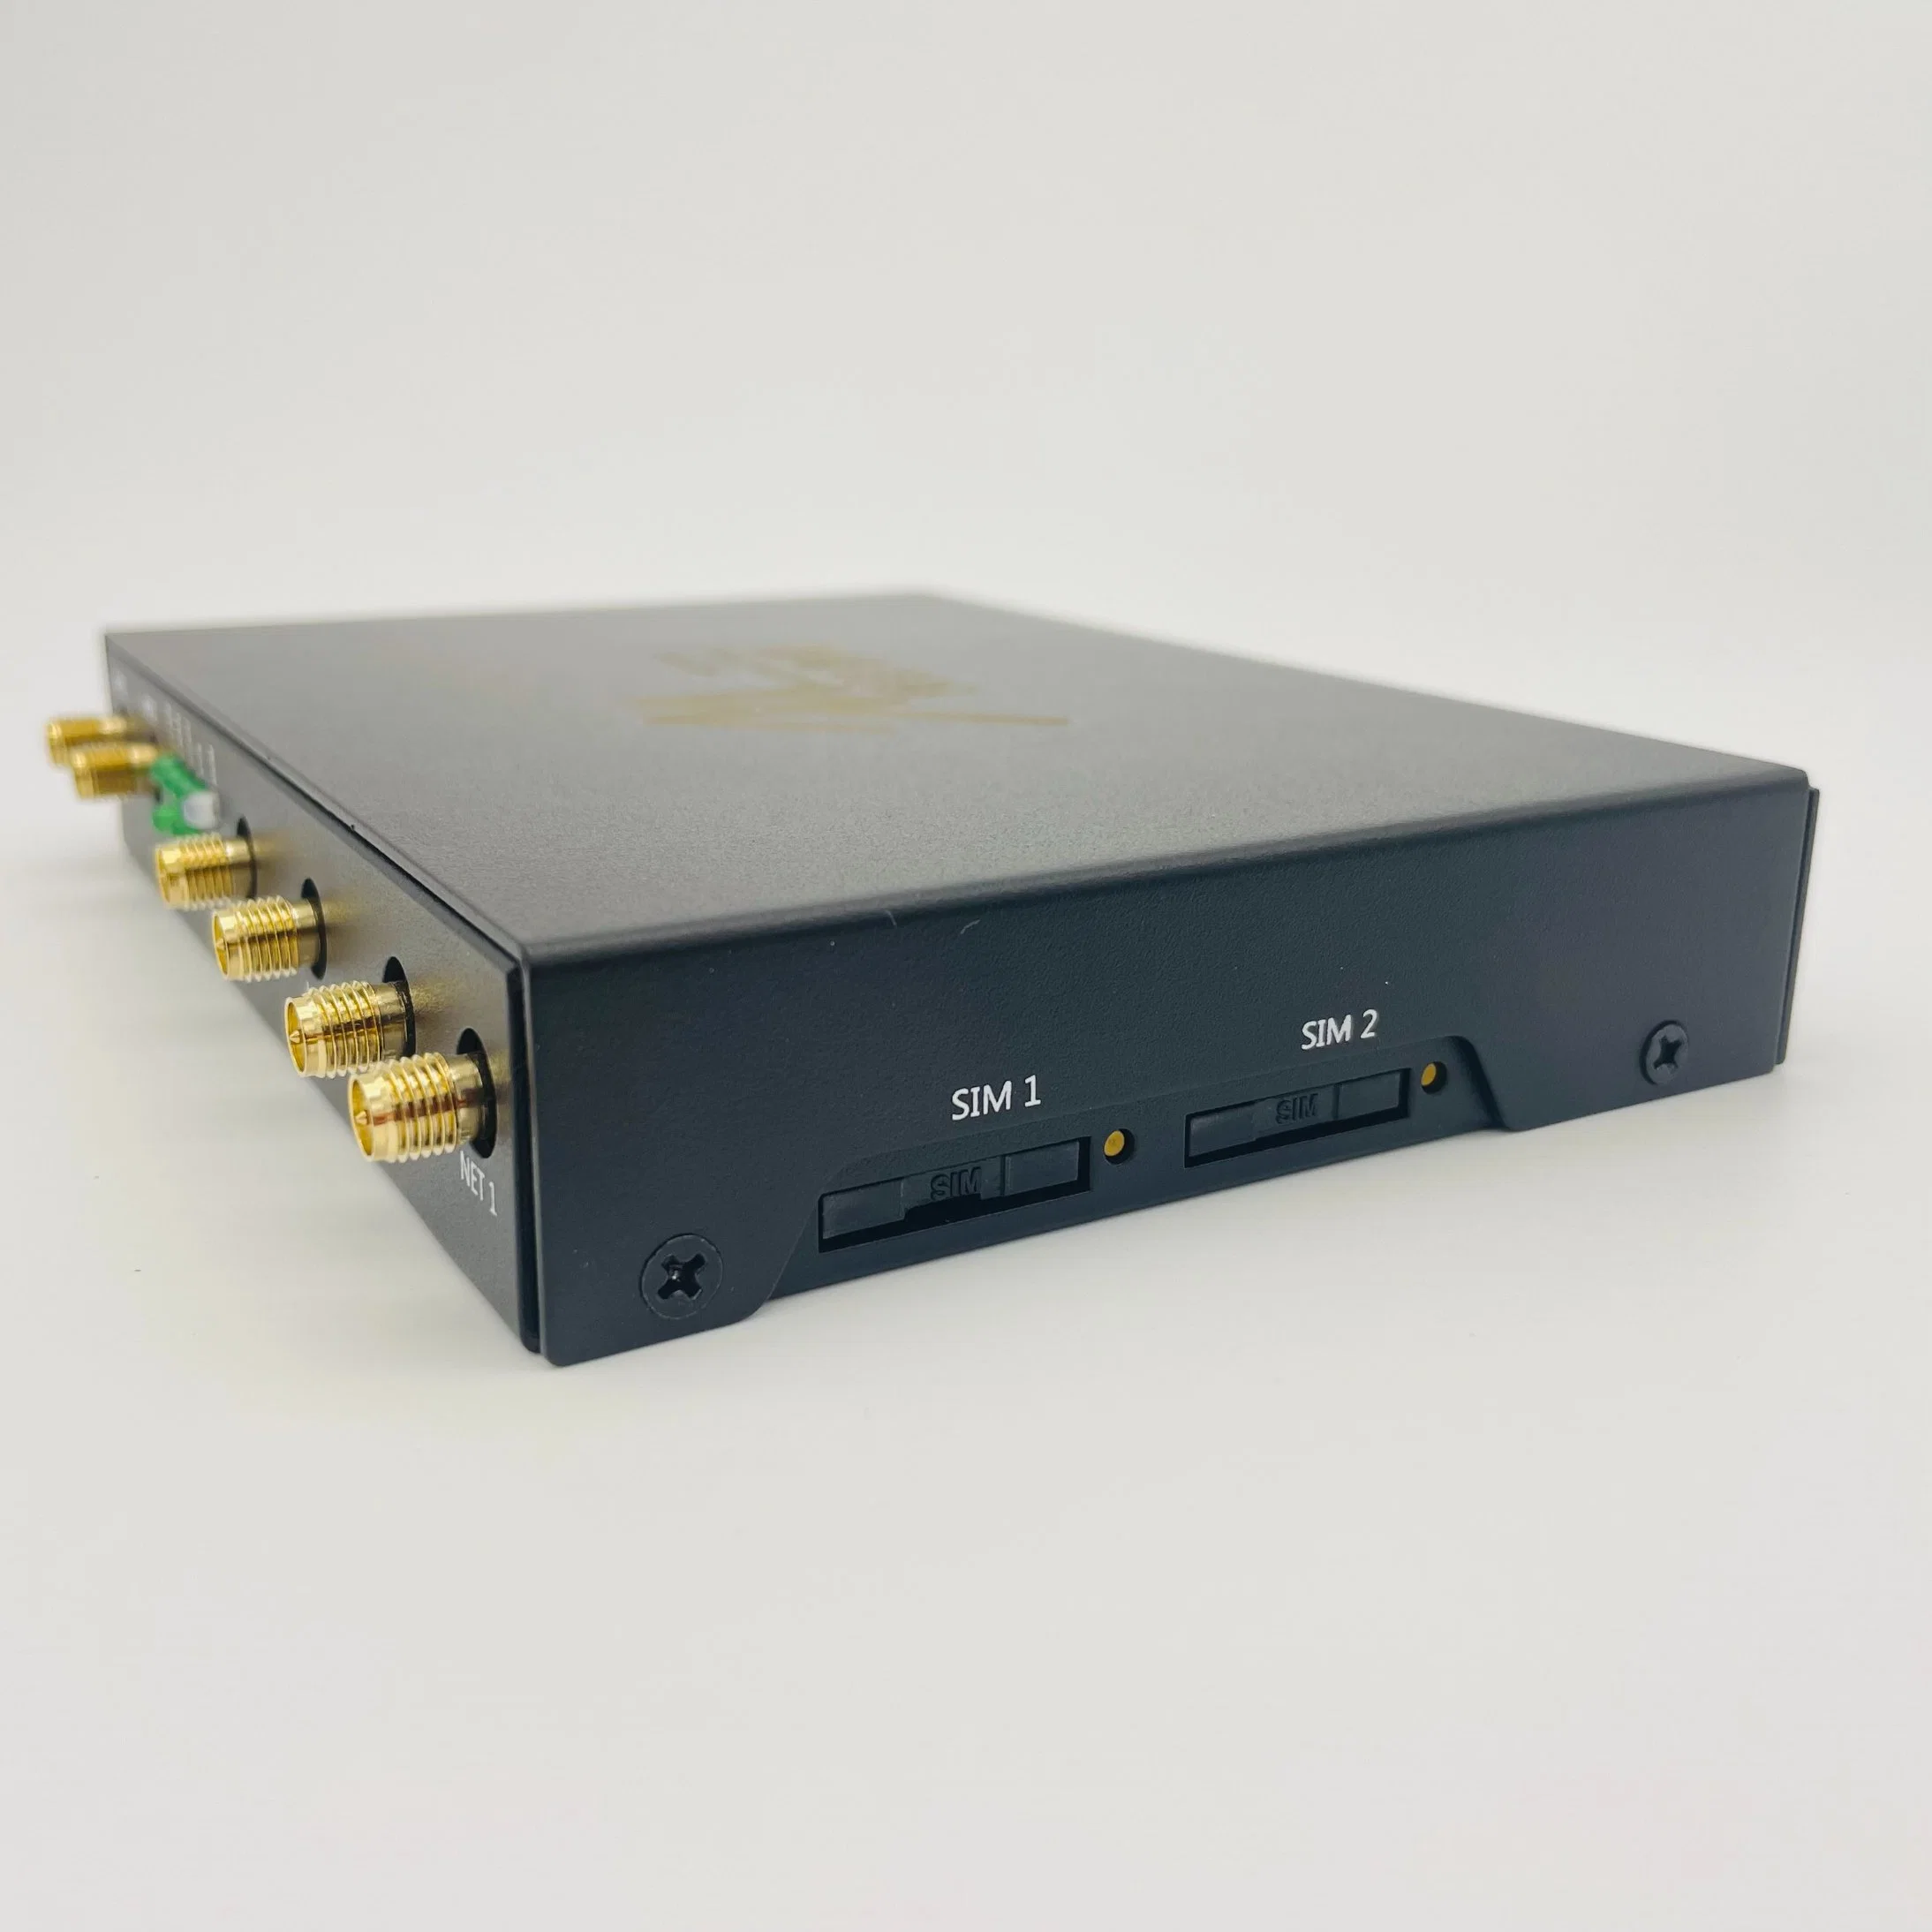 4G 5g Multi LAN Ports Enterprise Router Dual SIM Slots Industrial Modem